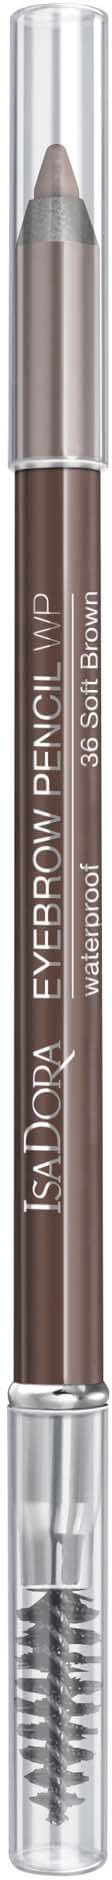 IsaDora Eyebrow Pencil Waterproof Soft Brown 36 1.2g